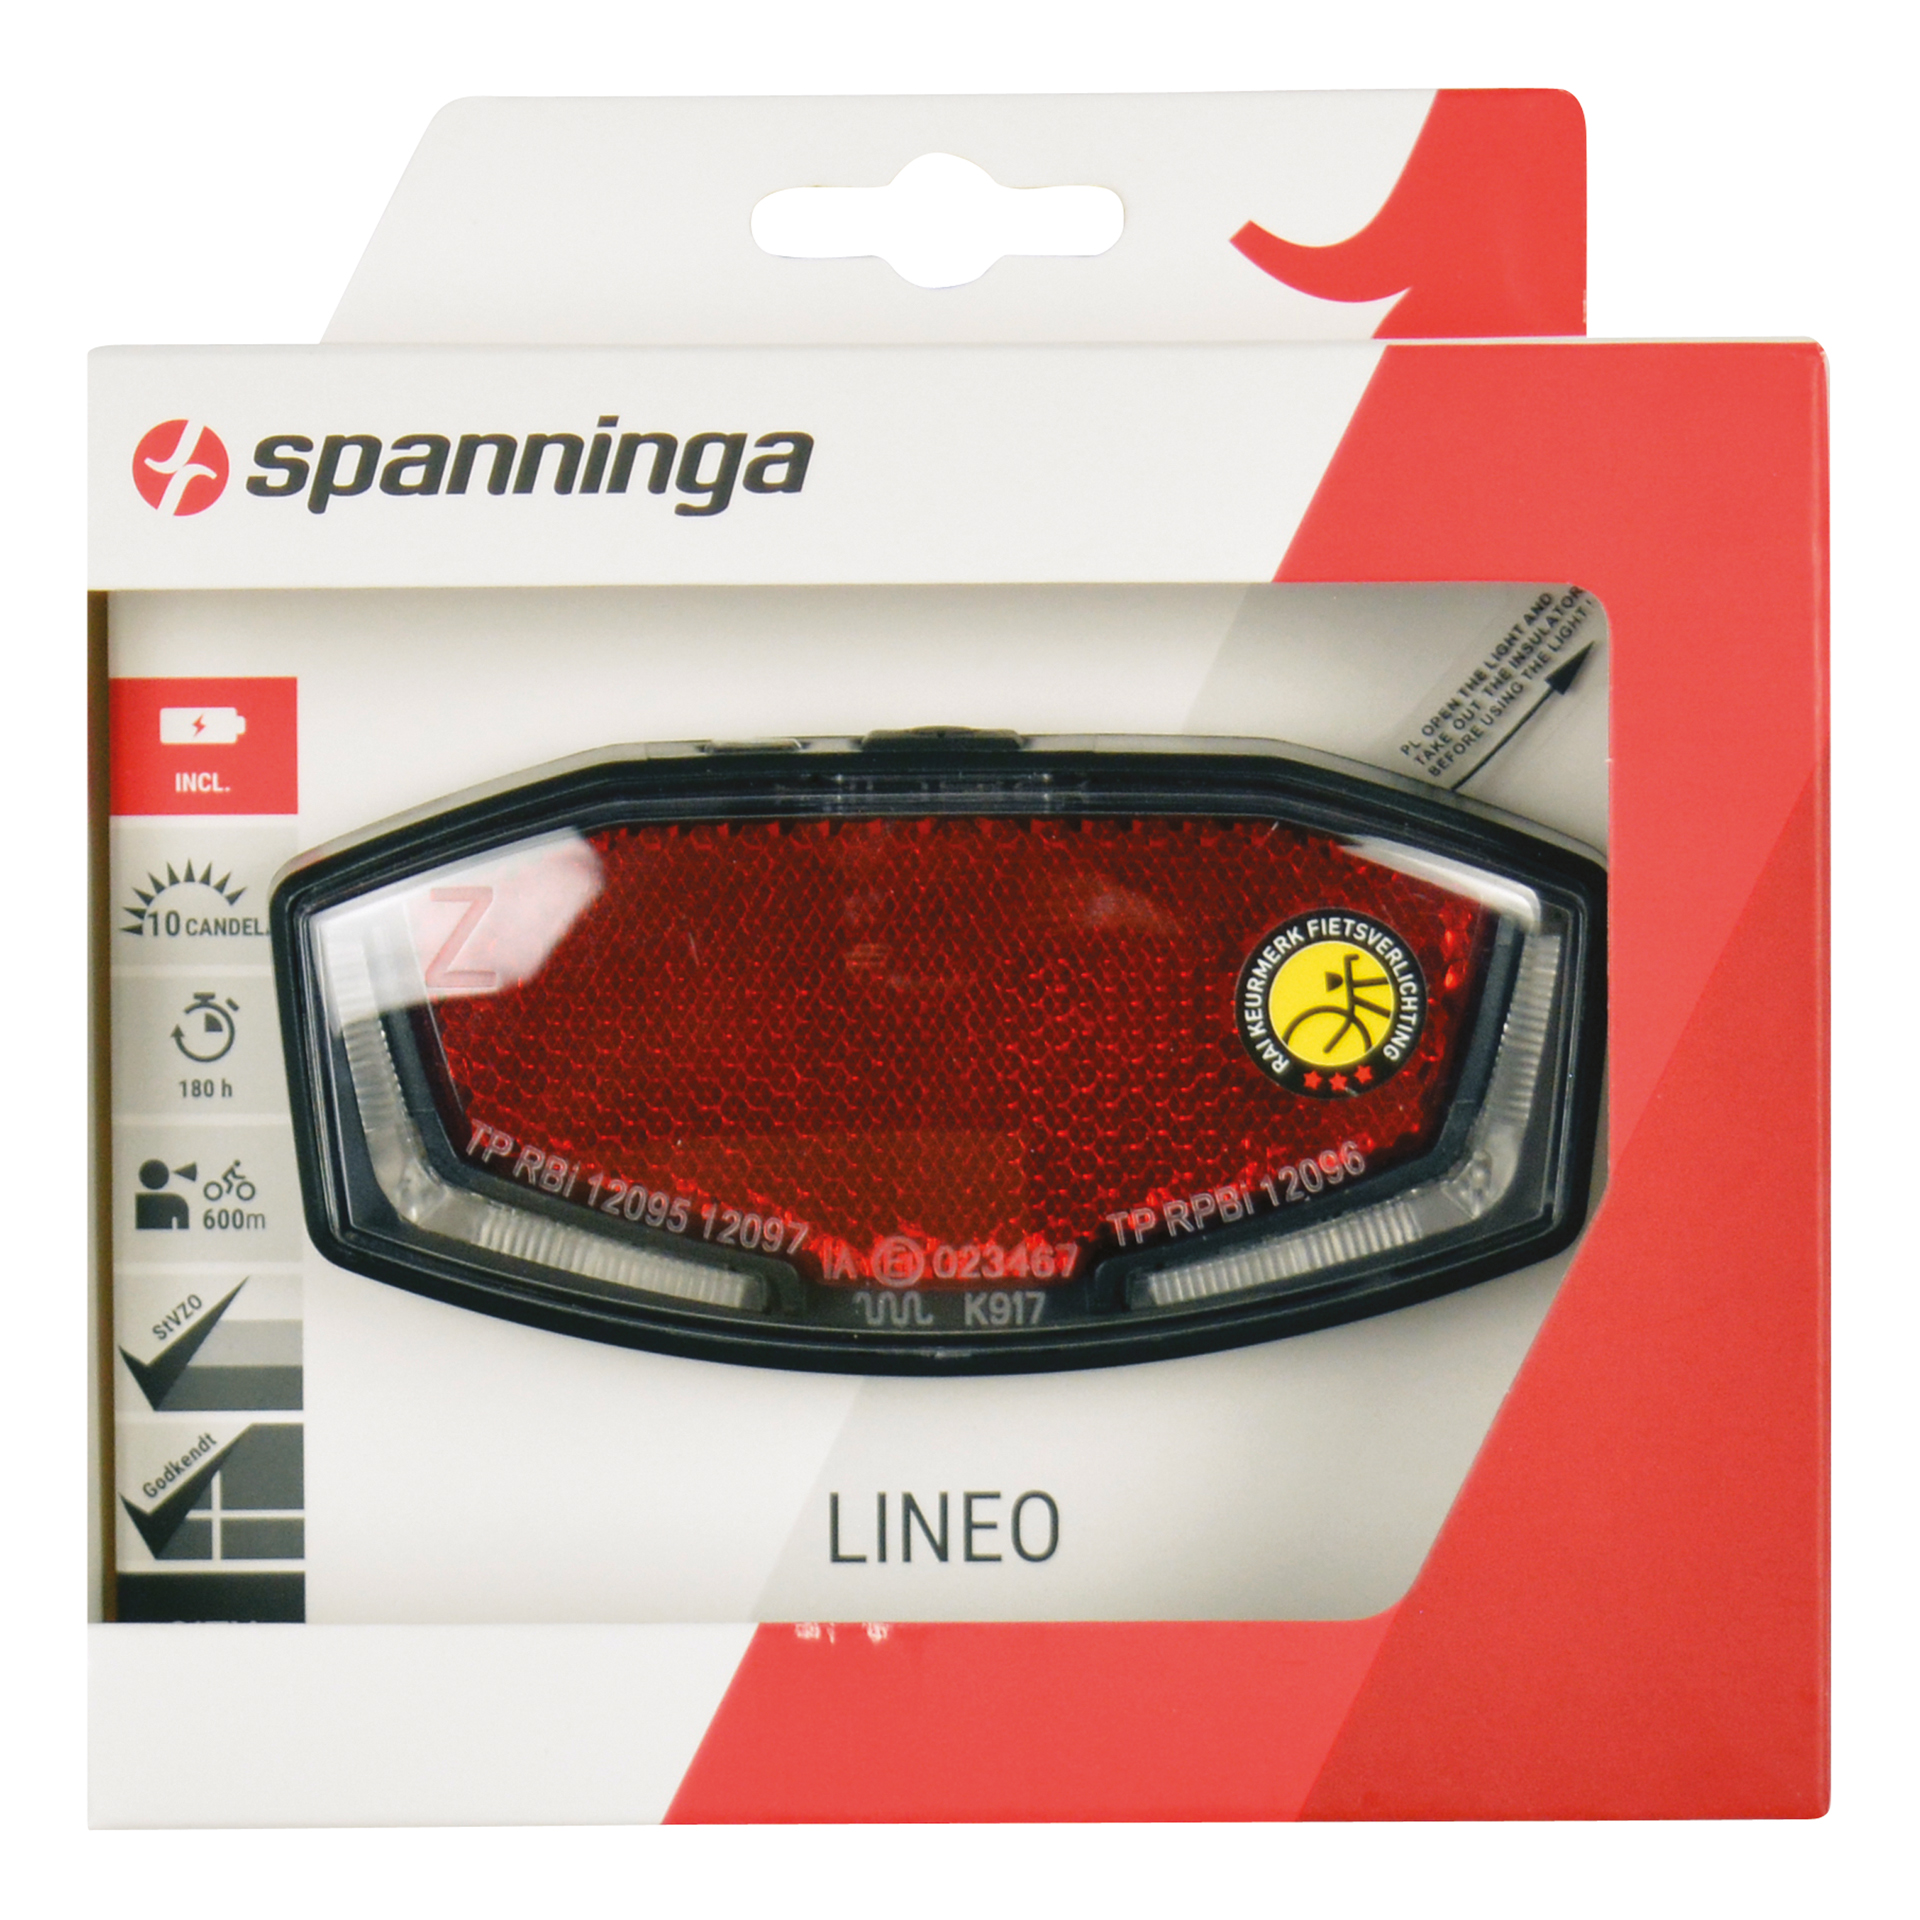 Spanninga Spanninga Achterlicht Lineo Batterijen 5036146